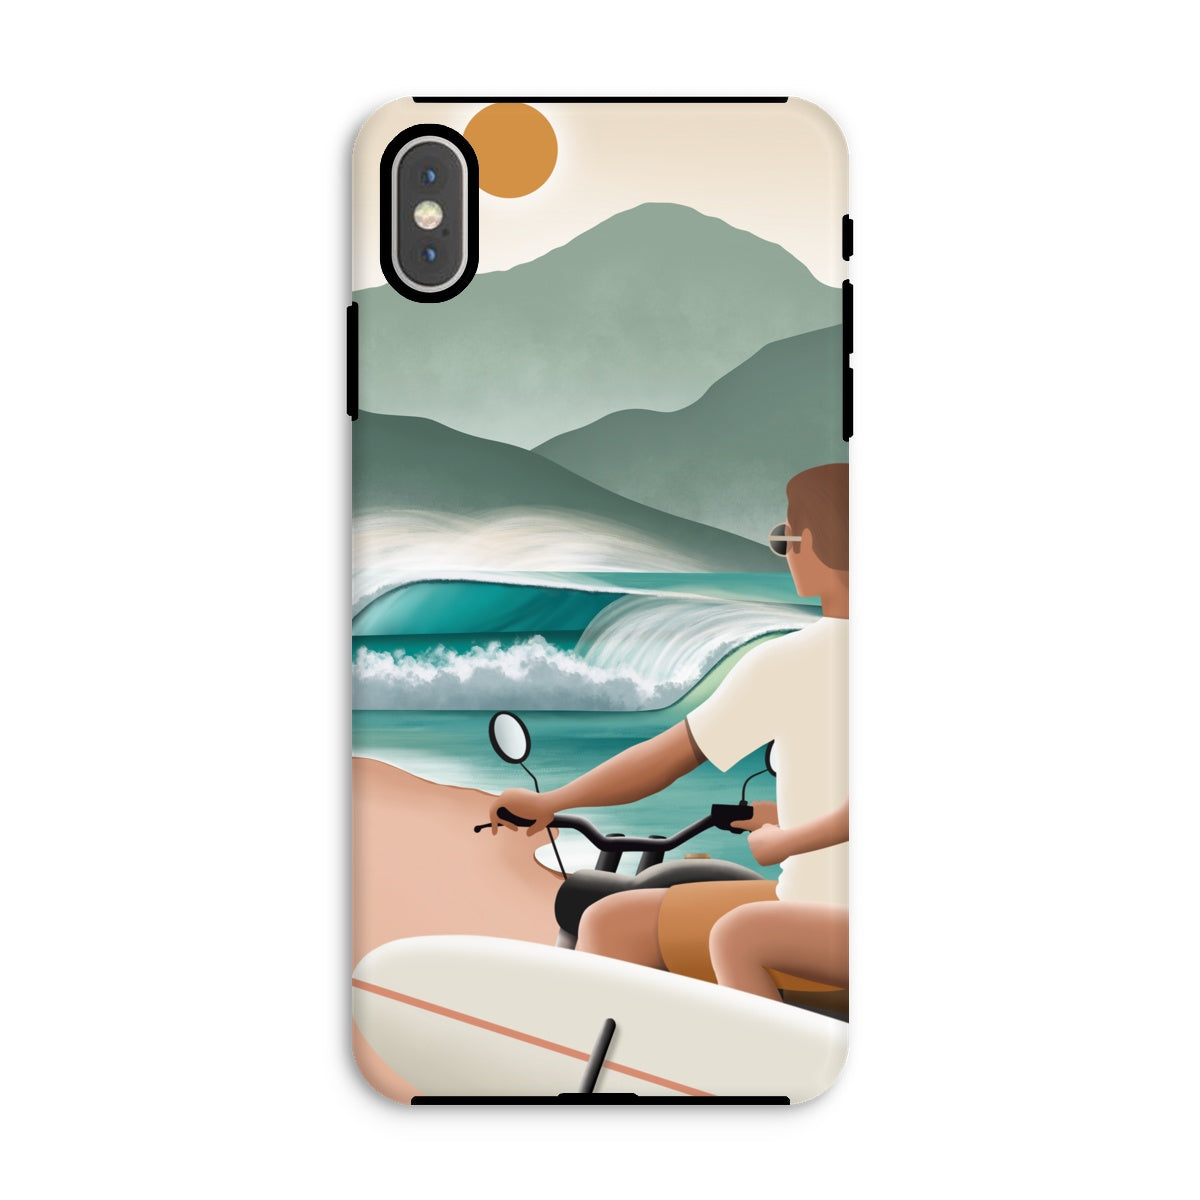 Surf love reinforced phone case